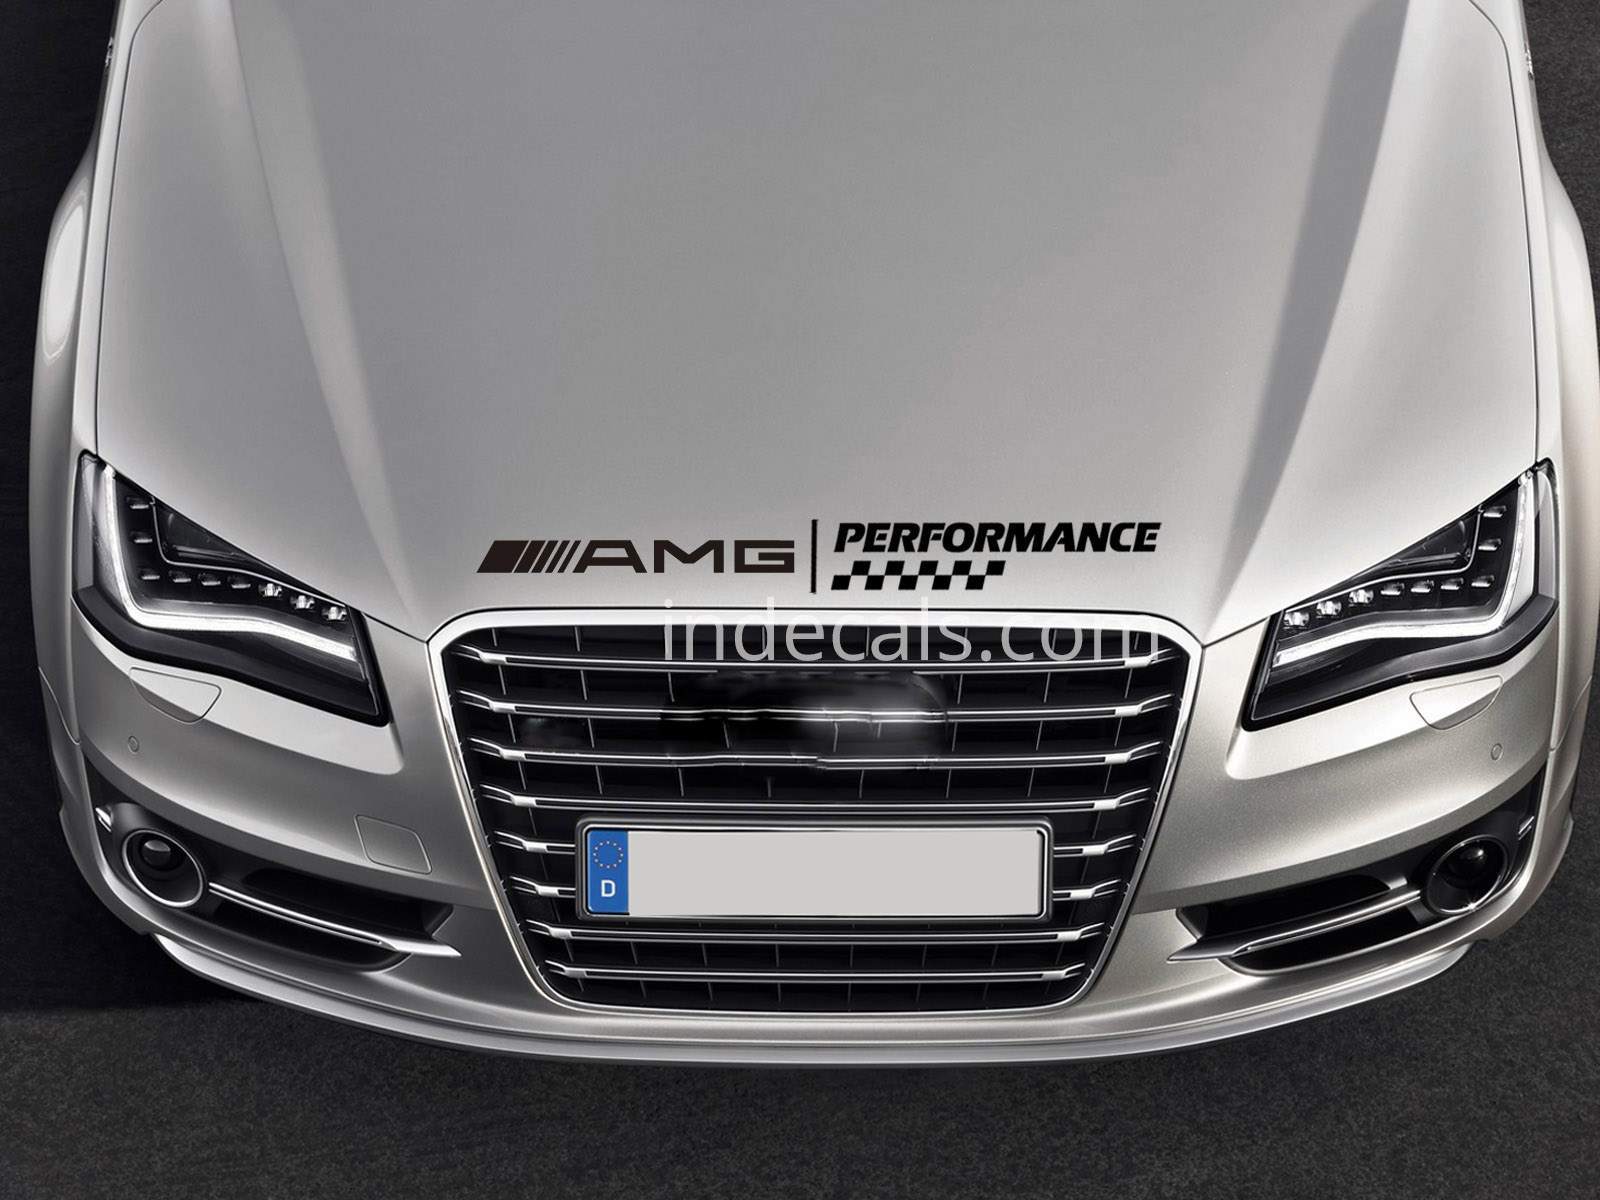 1 x AMG Performance Sticker for Bonnet - Black